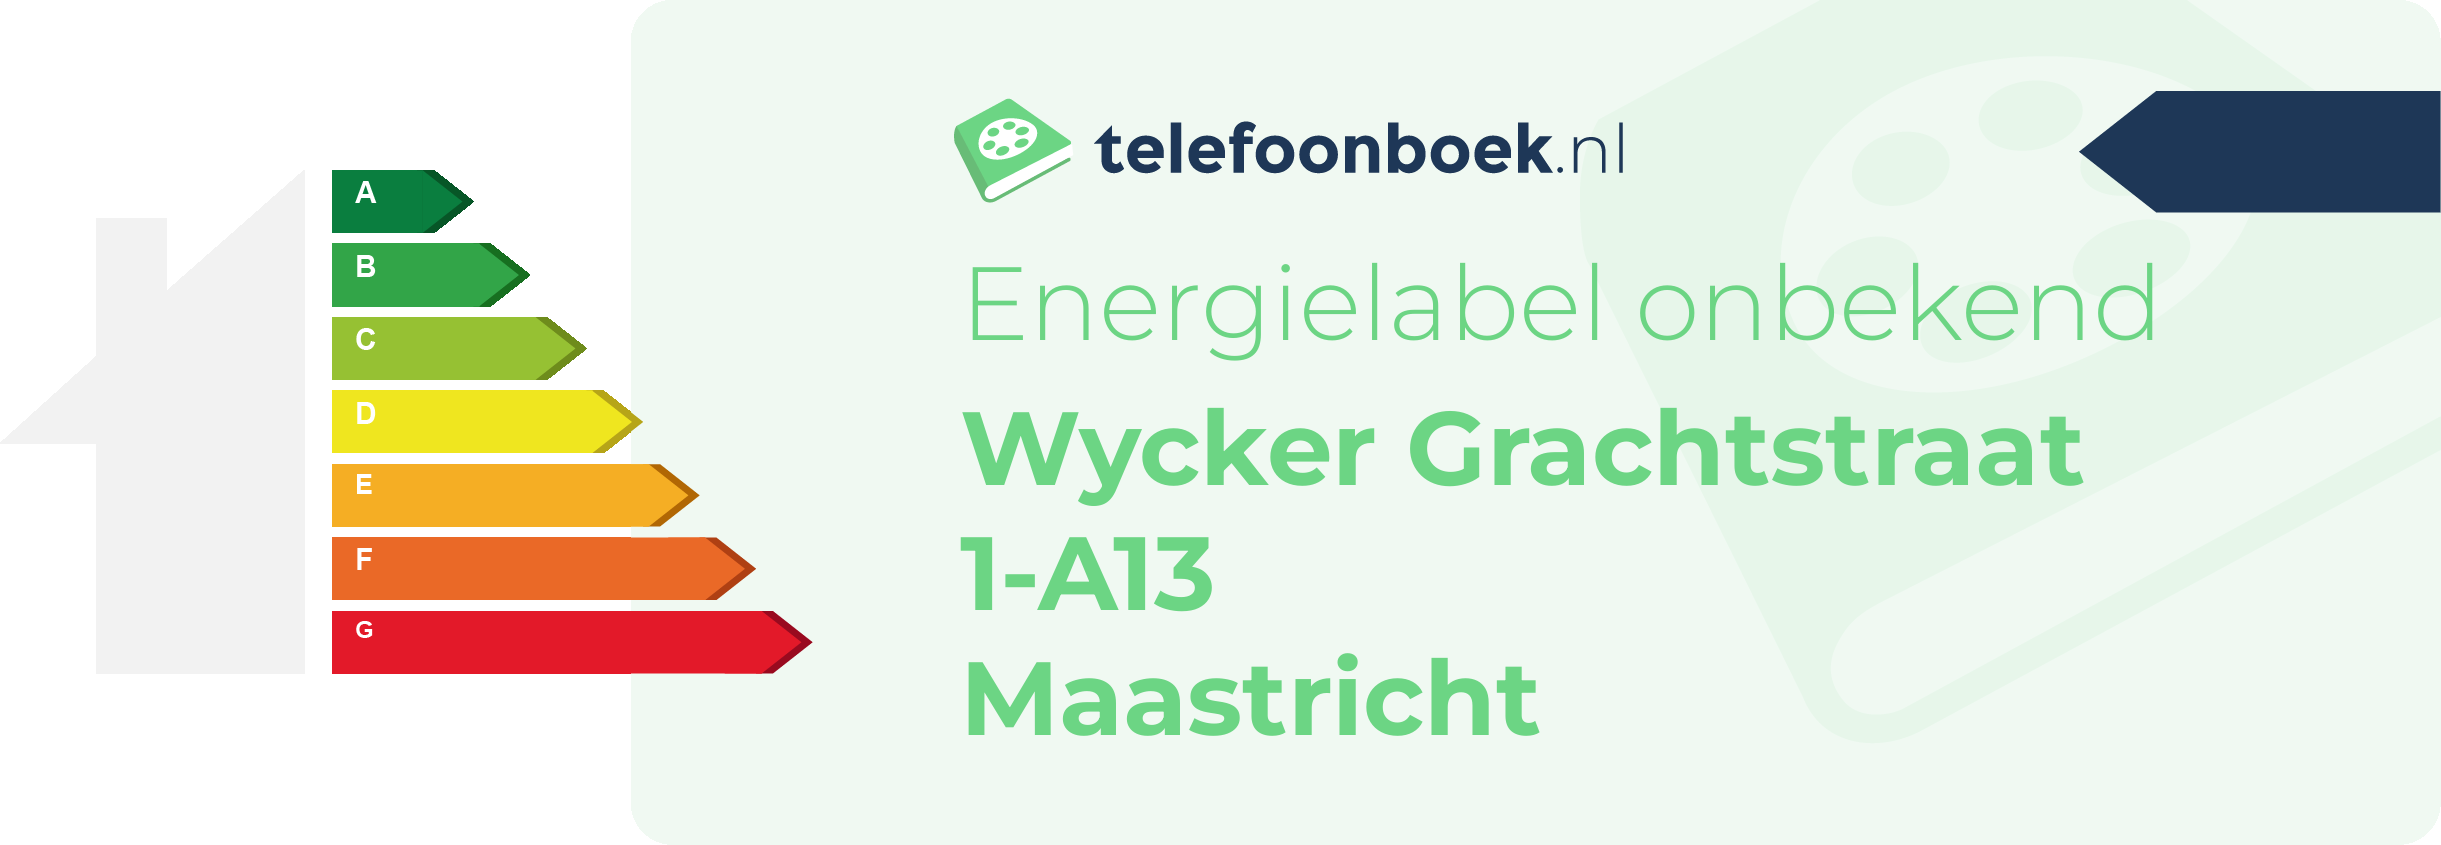 Energielabel Wycker Grachtstraat 1-A13 Maastricht